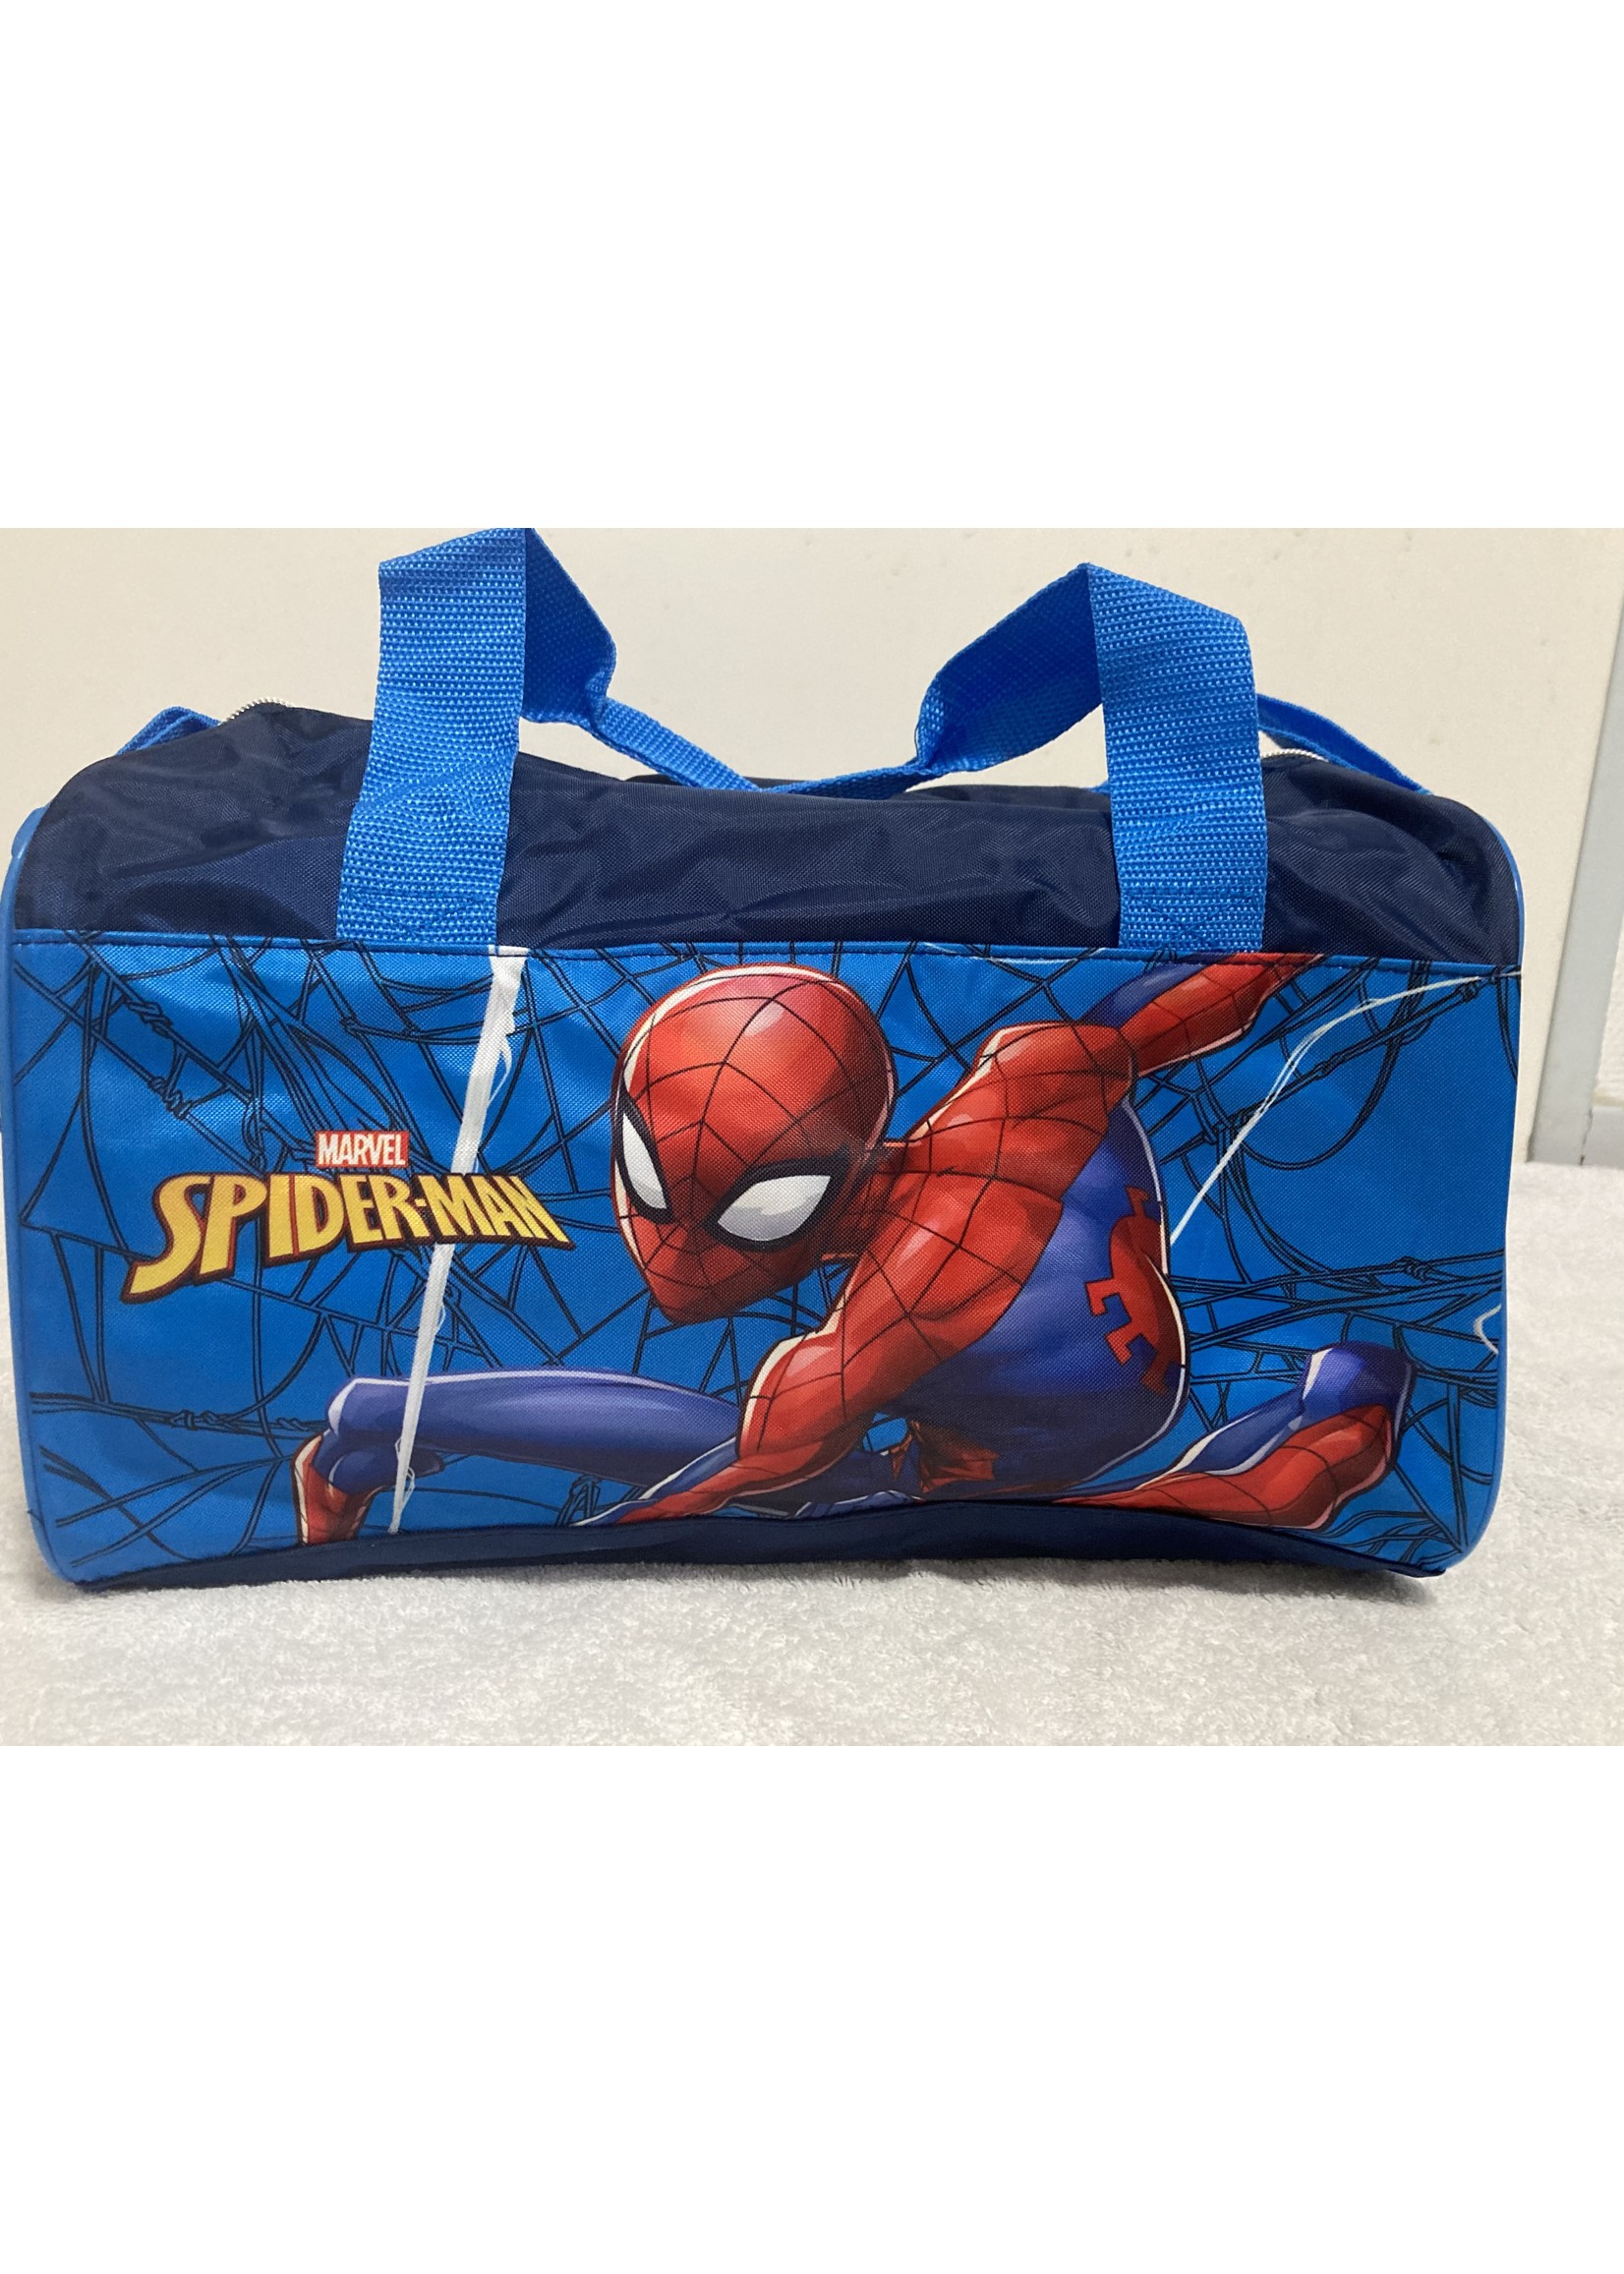 Marvel Spiderman sports bag from Marvel navy blue